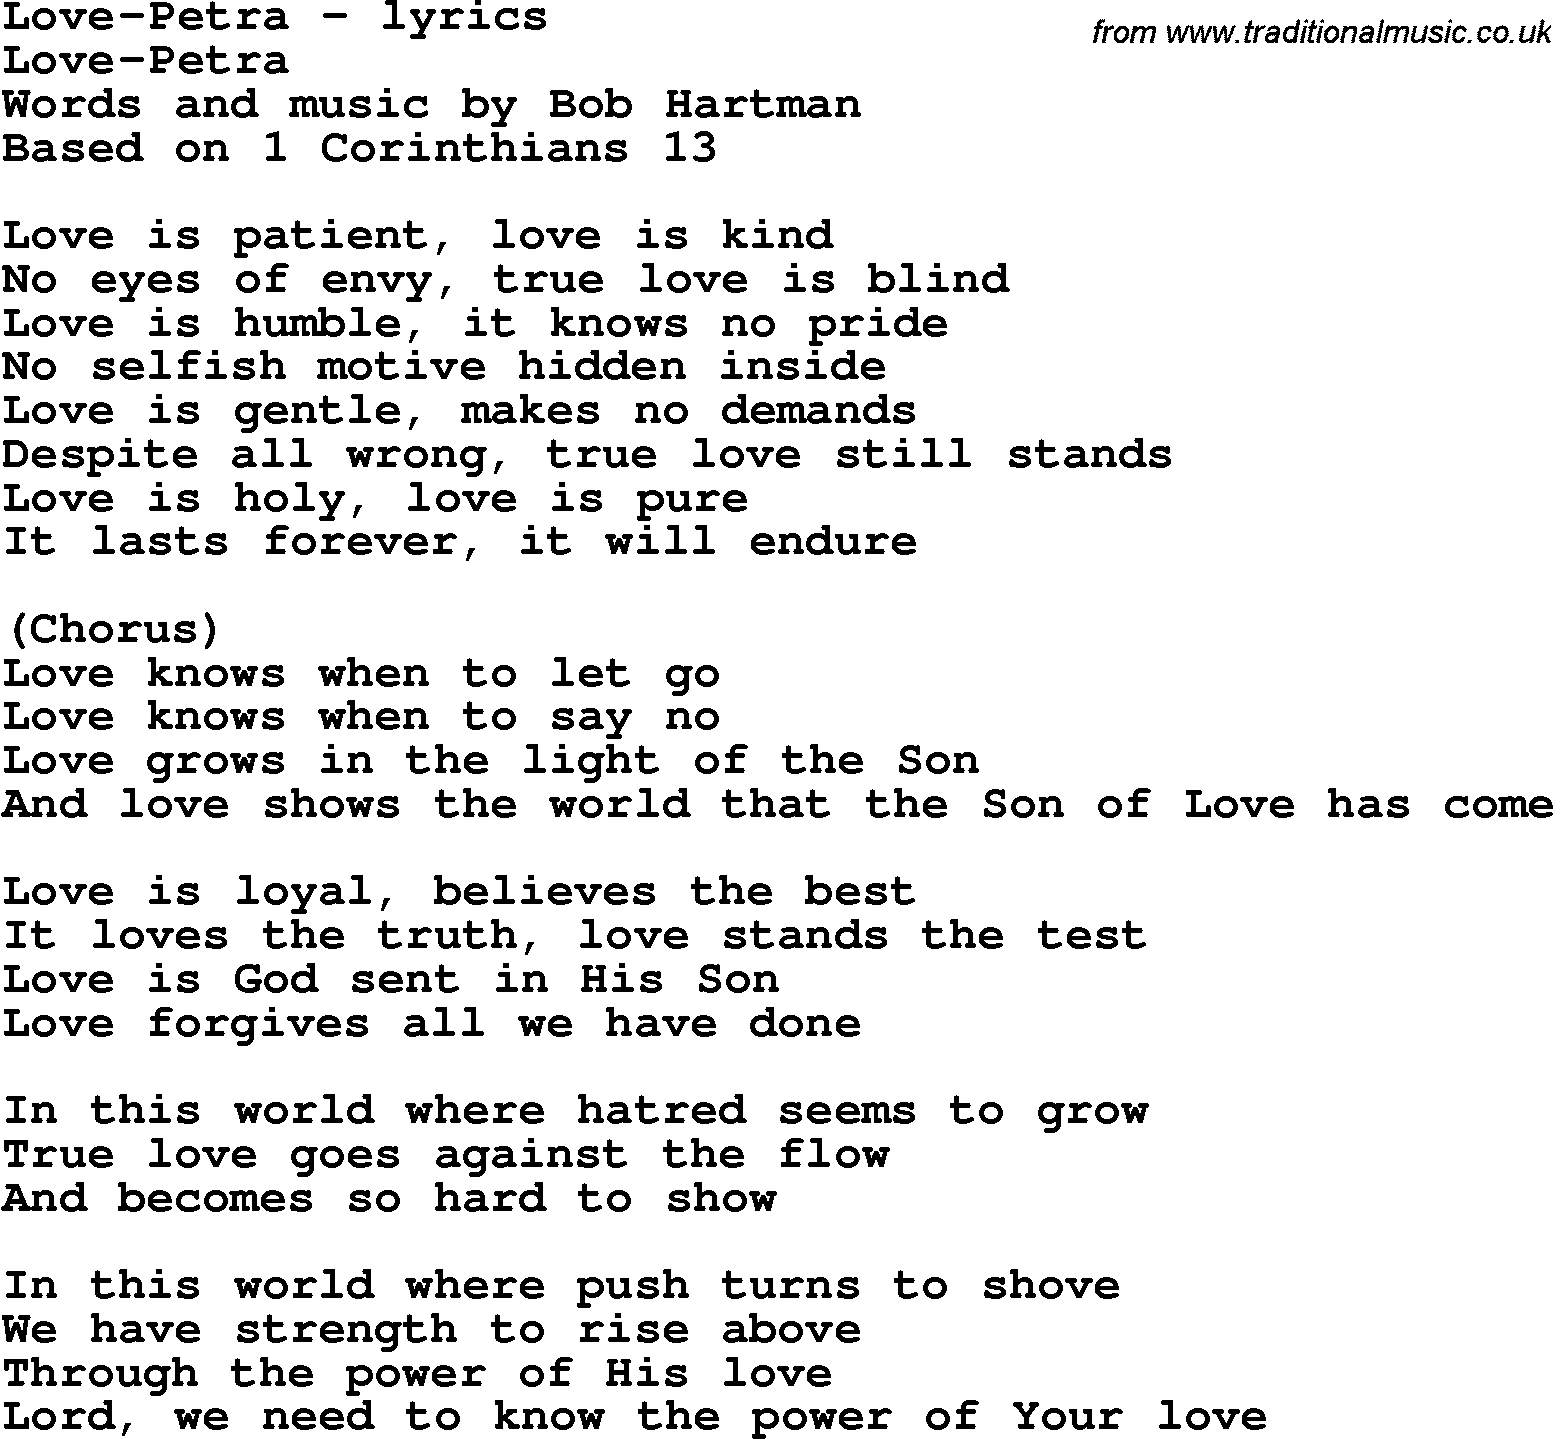 Love Song Lyrics for: Love-Petra